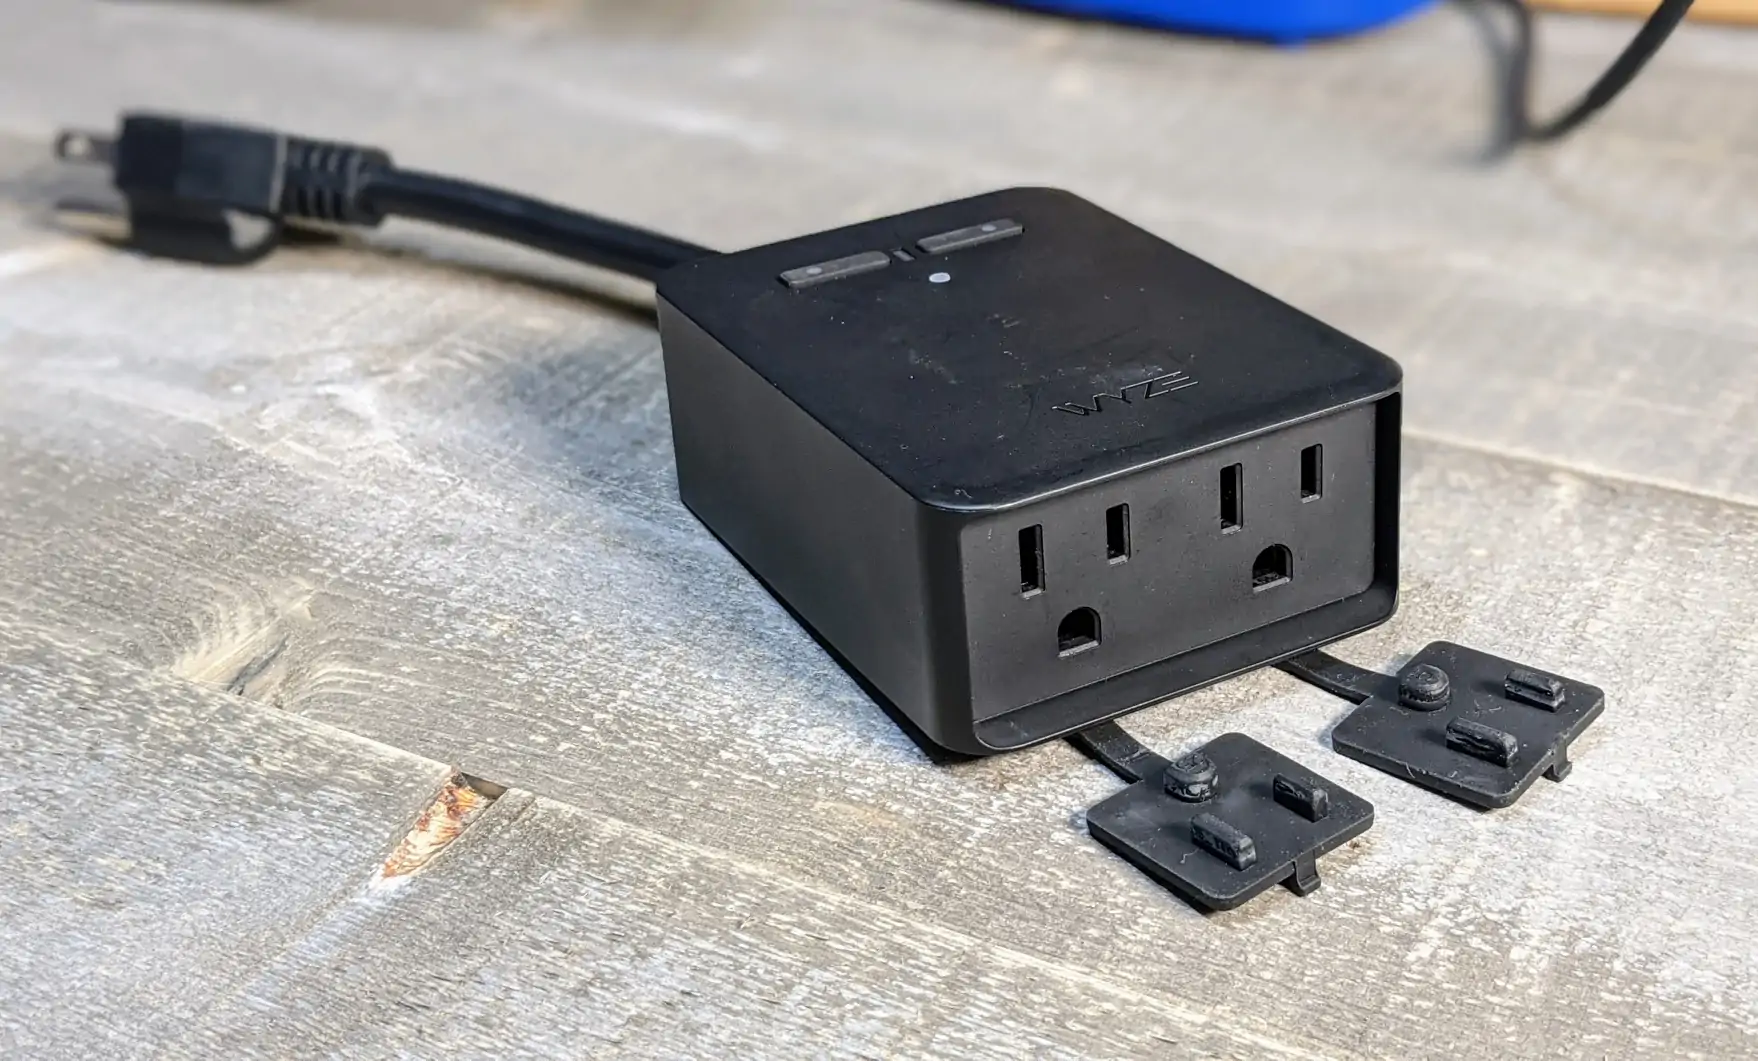 Wyze Plug Outdoor ‎WLPPO1-1 Smart Plug for sale online